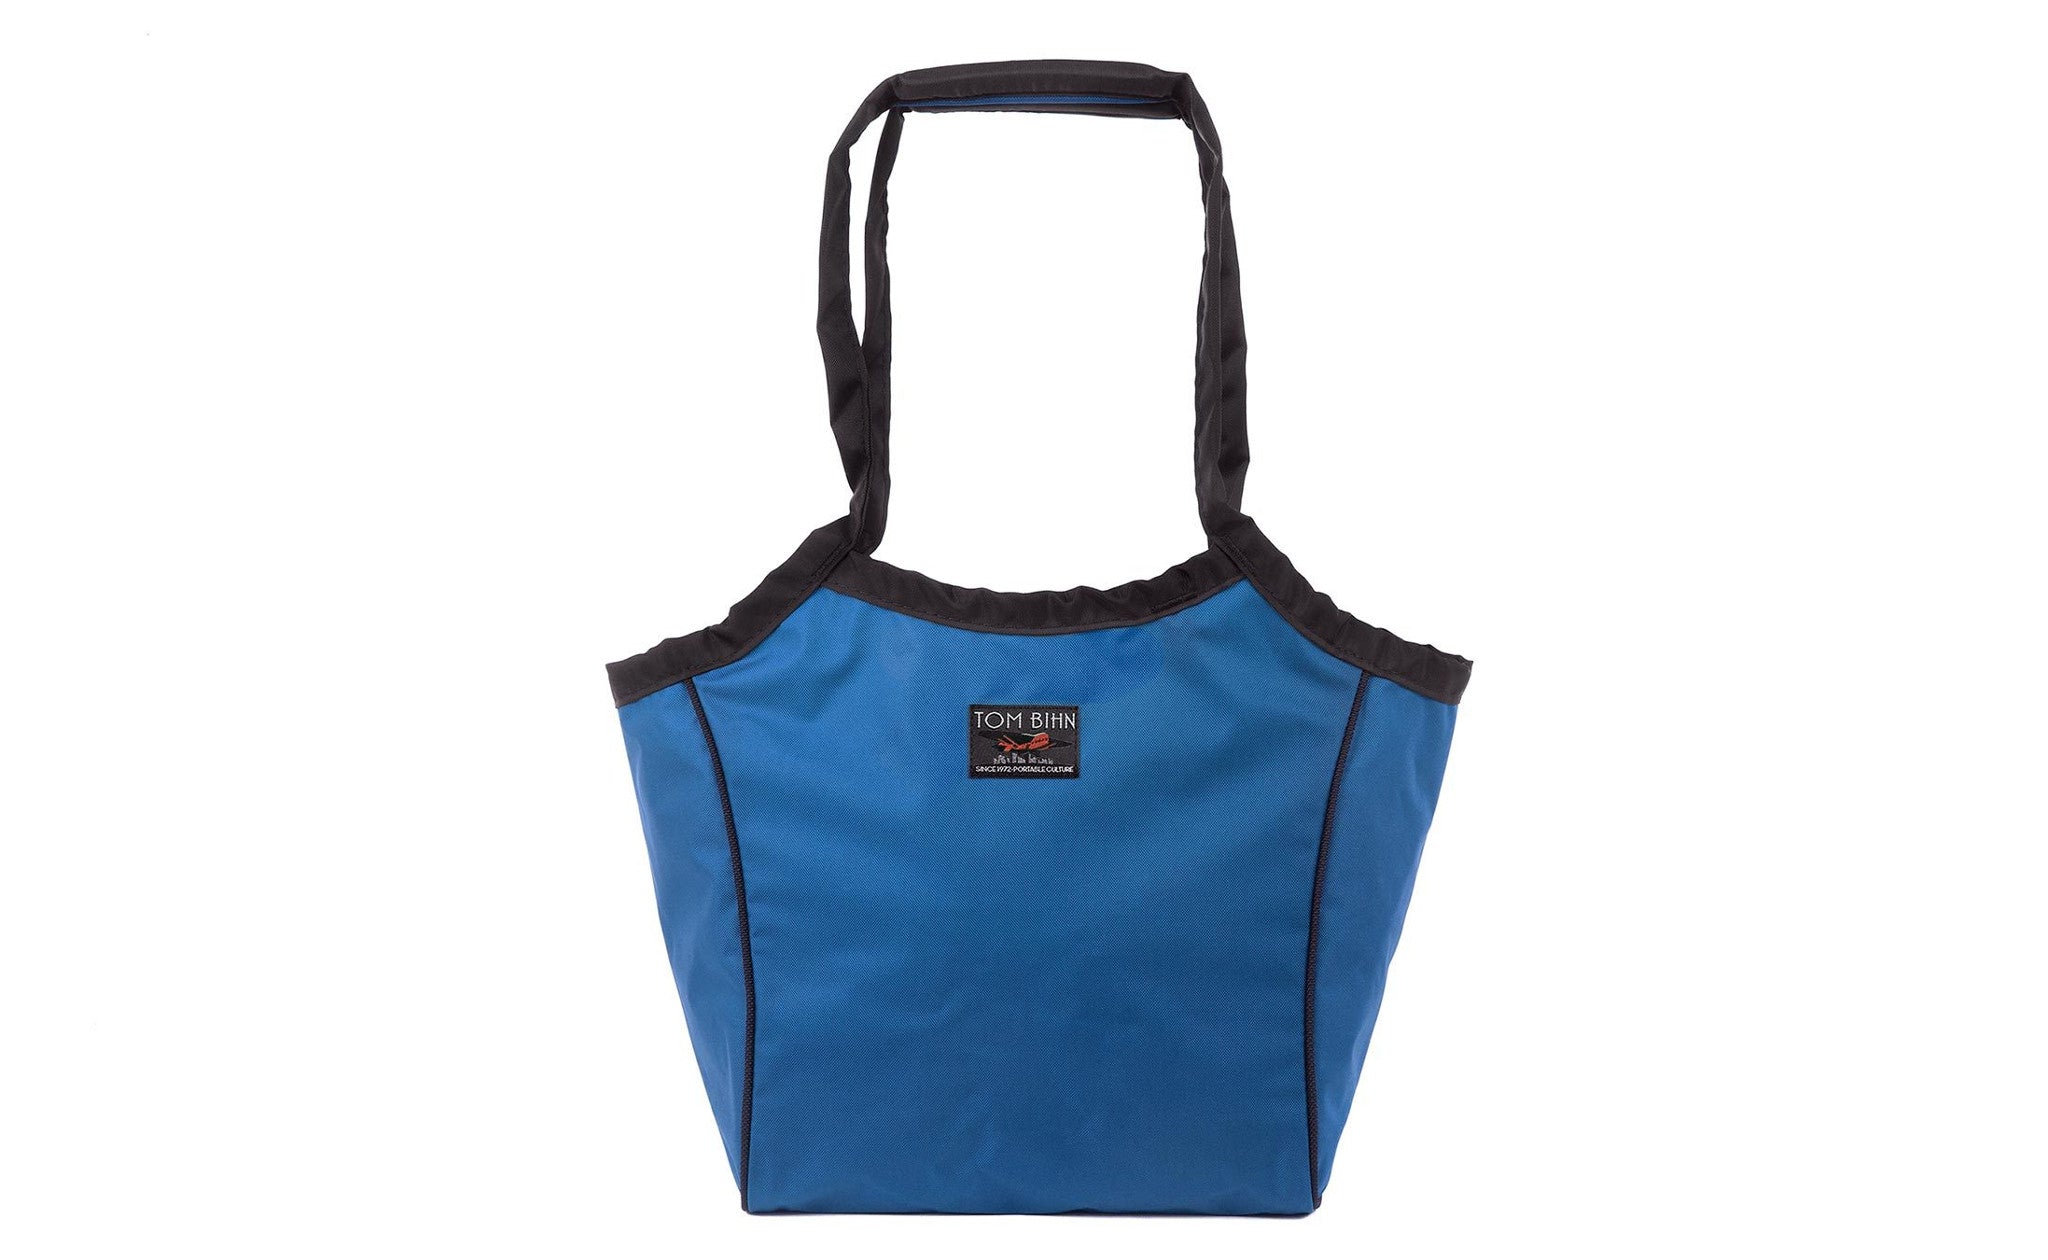 TOM BIHN Original Small Shop Bag, Reusable Shopping Bag, 15L